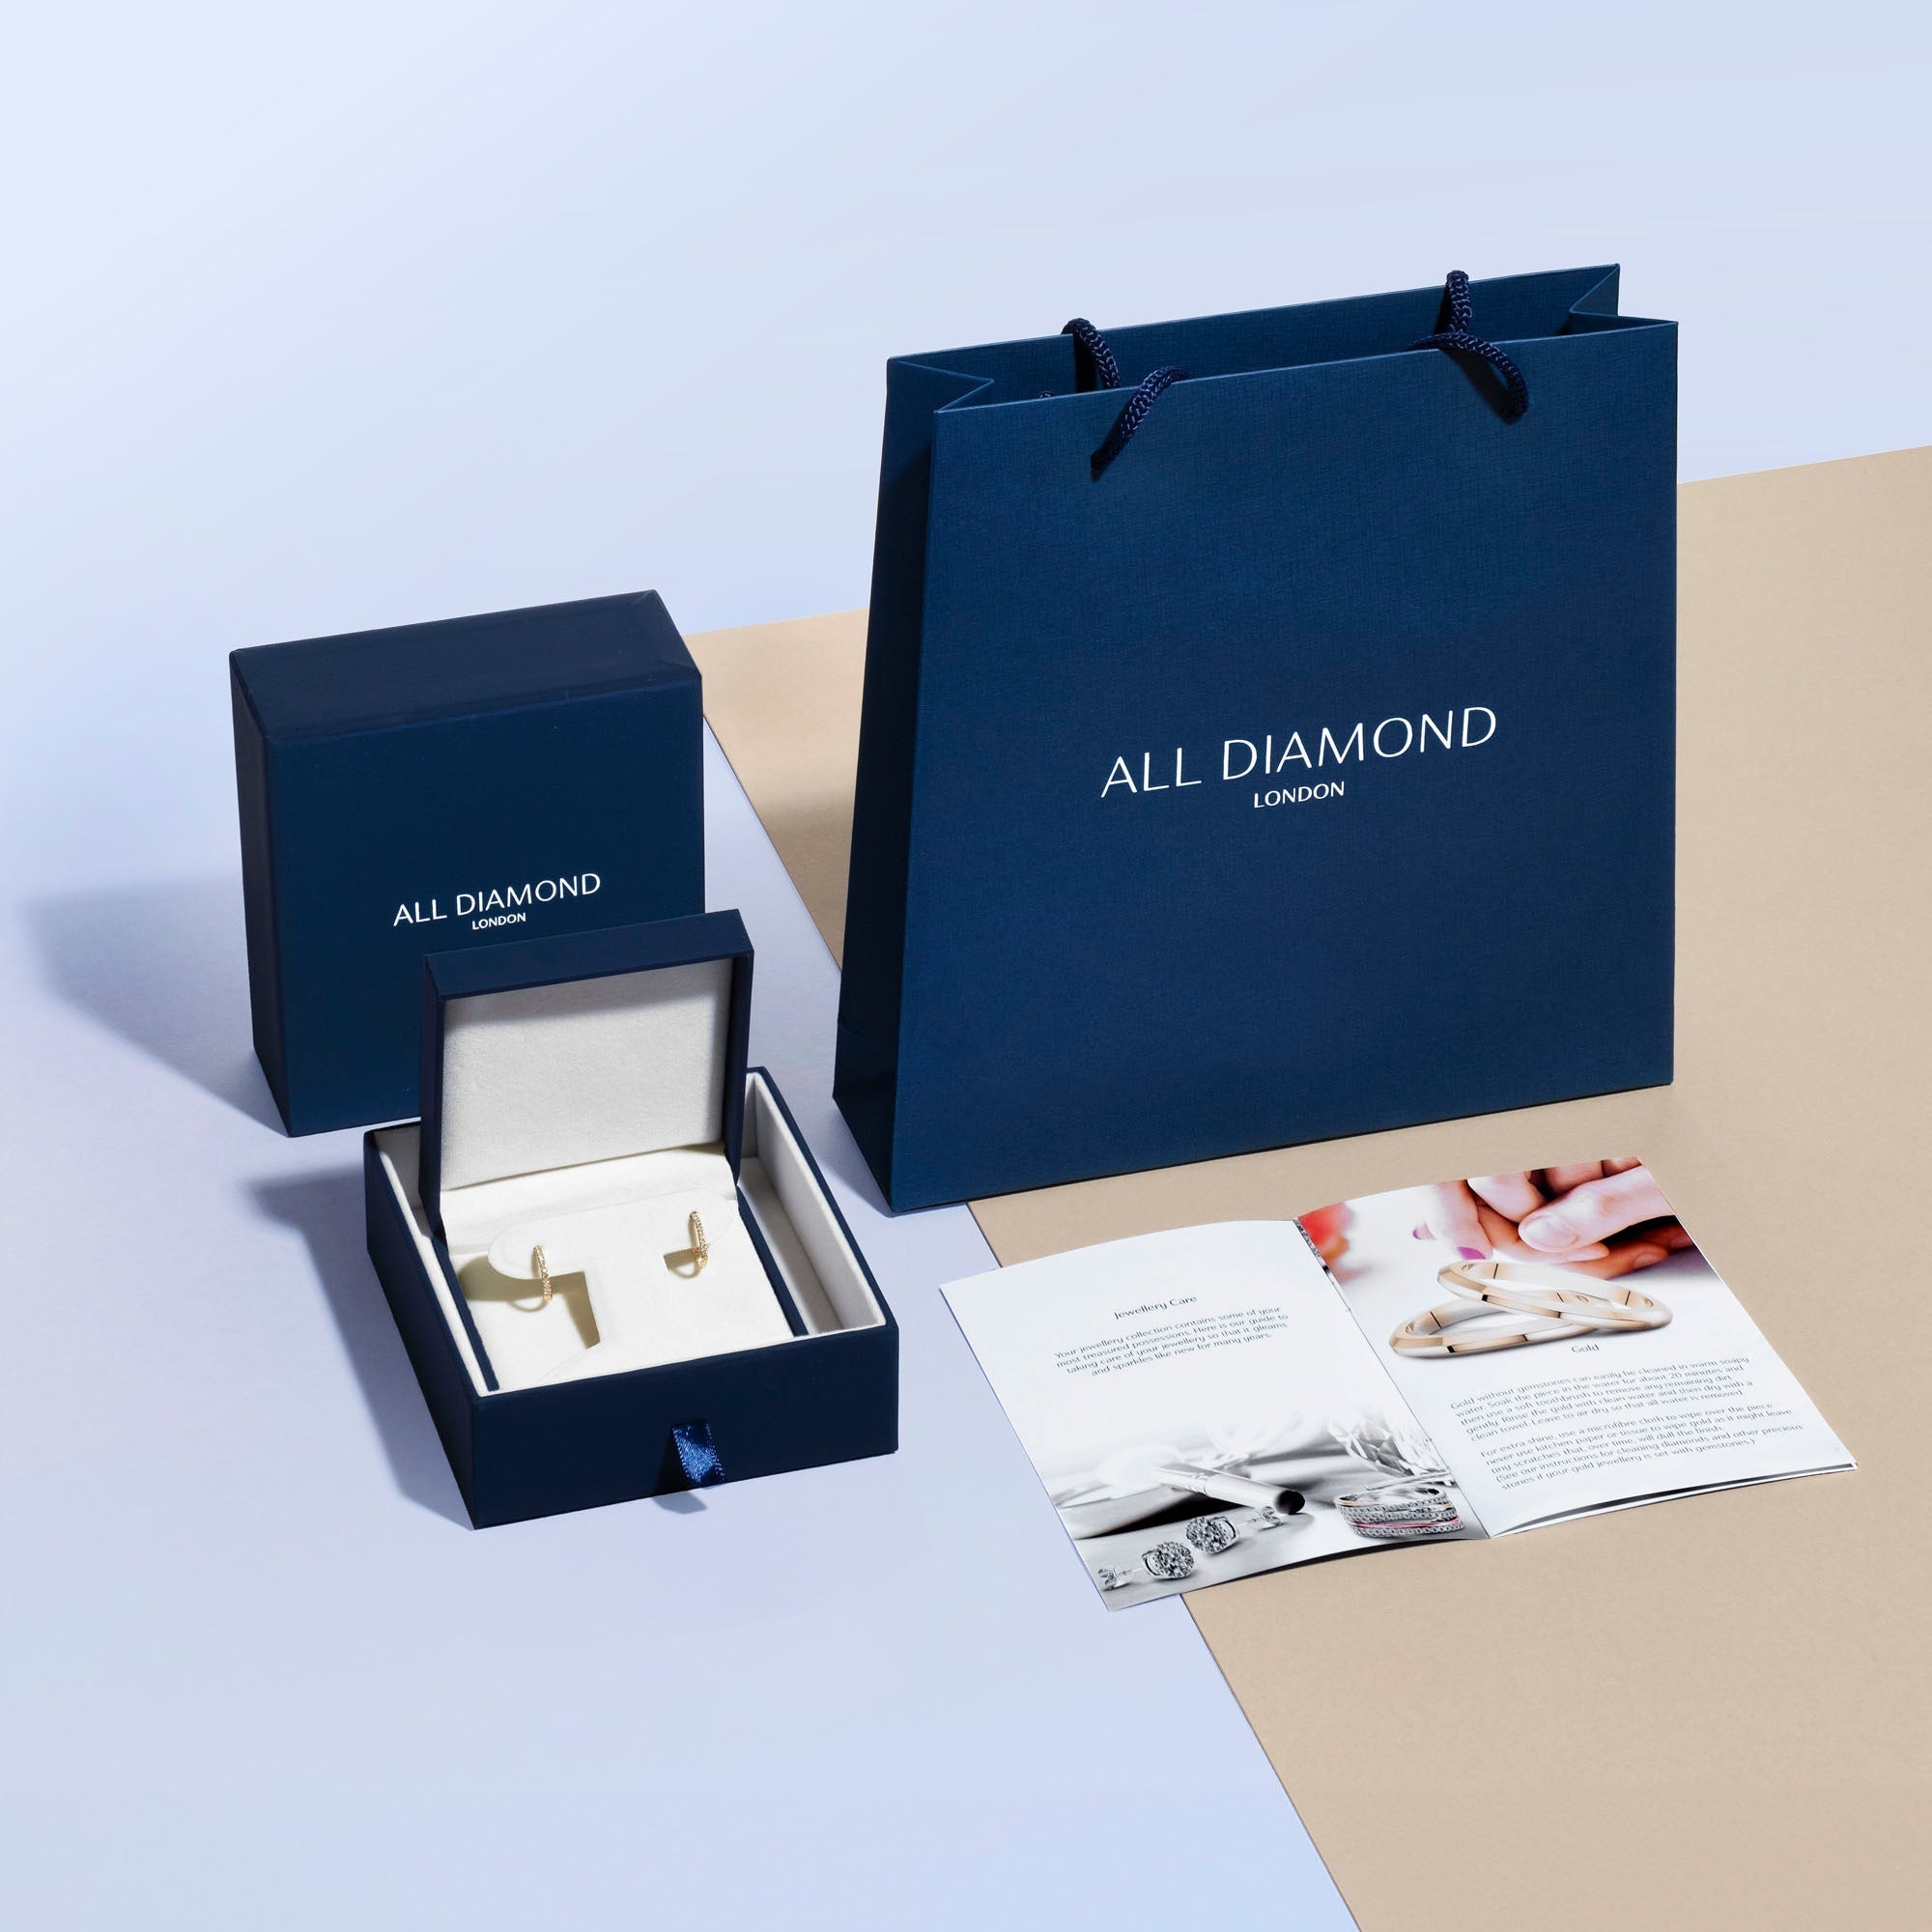 Halo Diamond Earrings 0.65ct Set in 18k White Gold 4.5mm - All Diamond